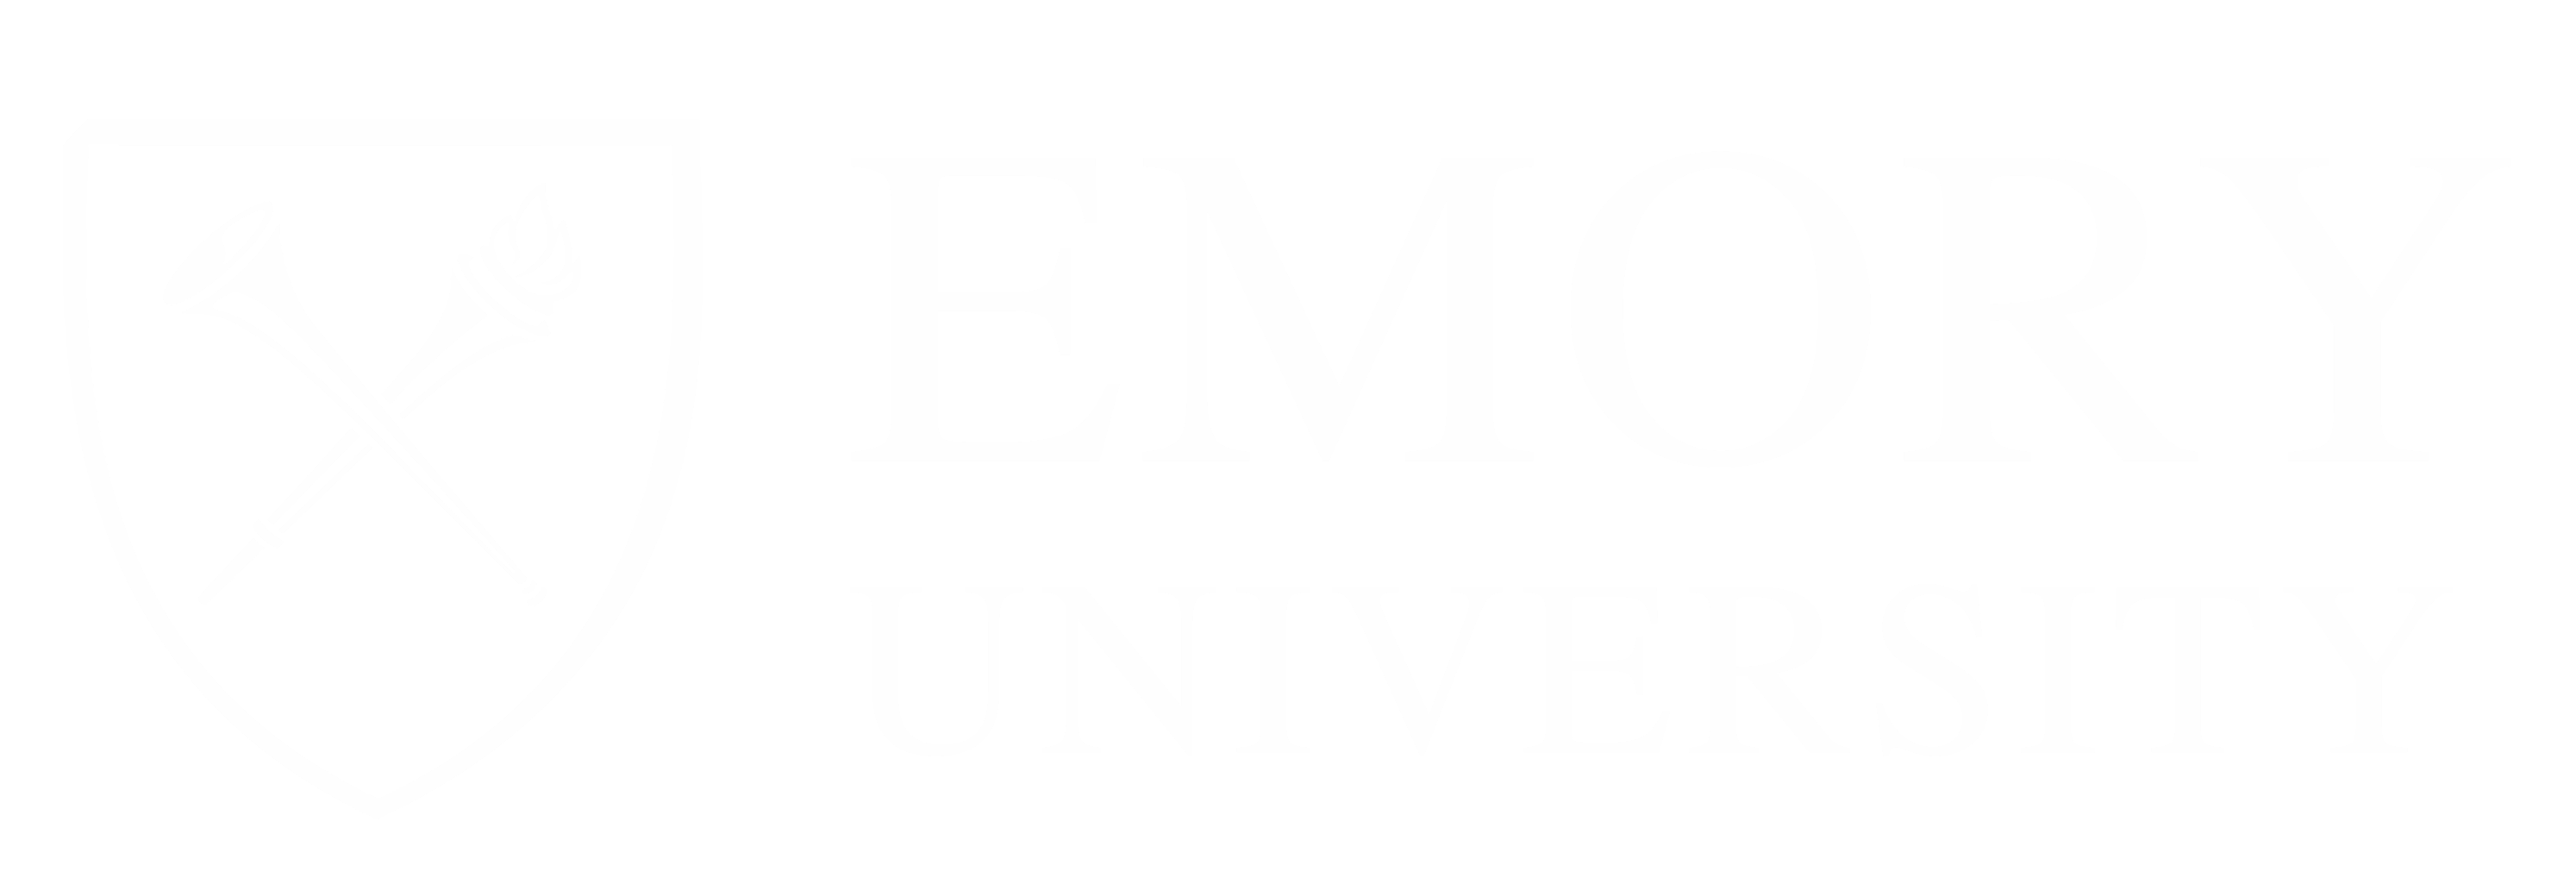 emory-university-logo_white